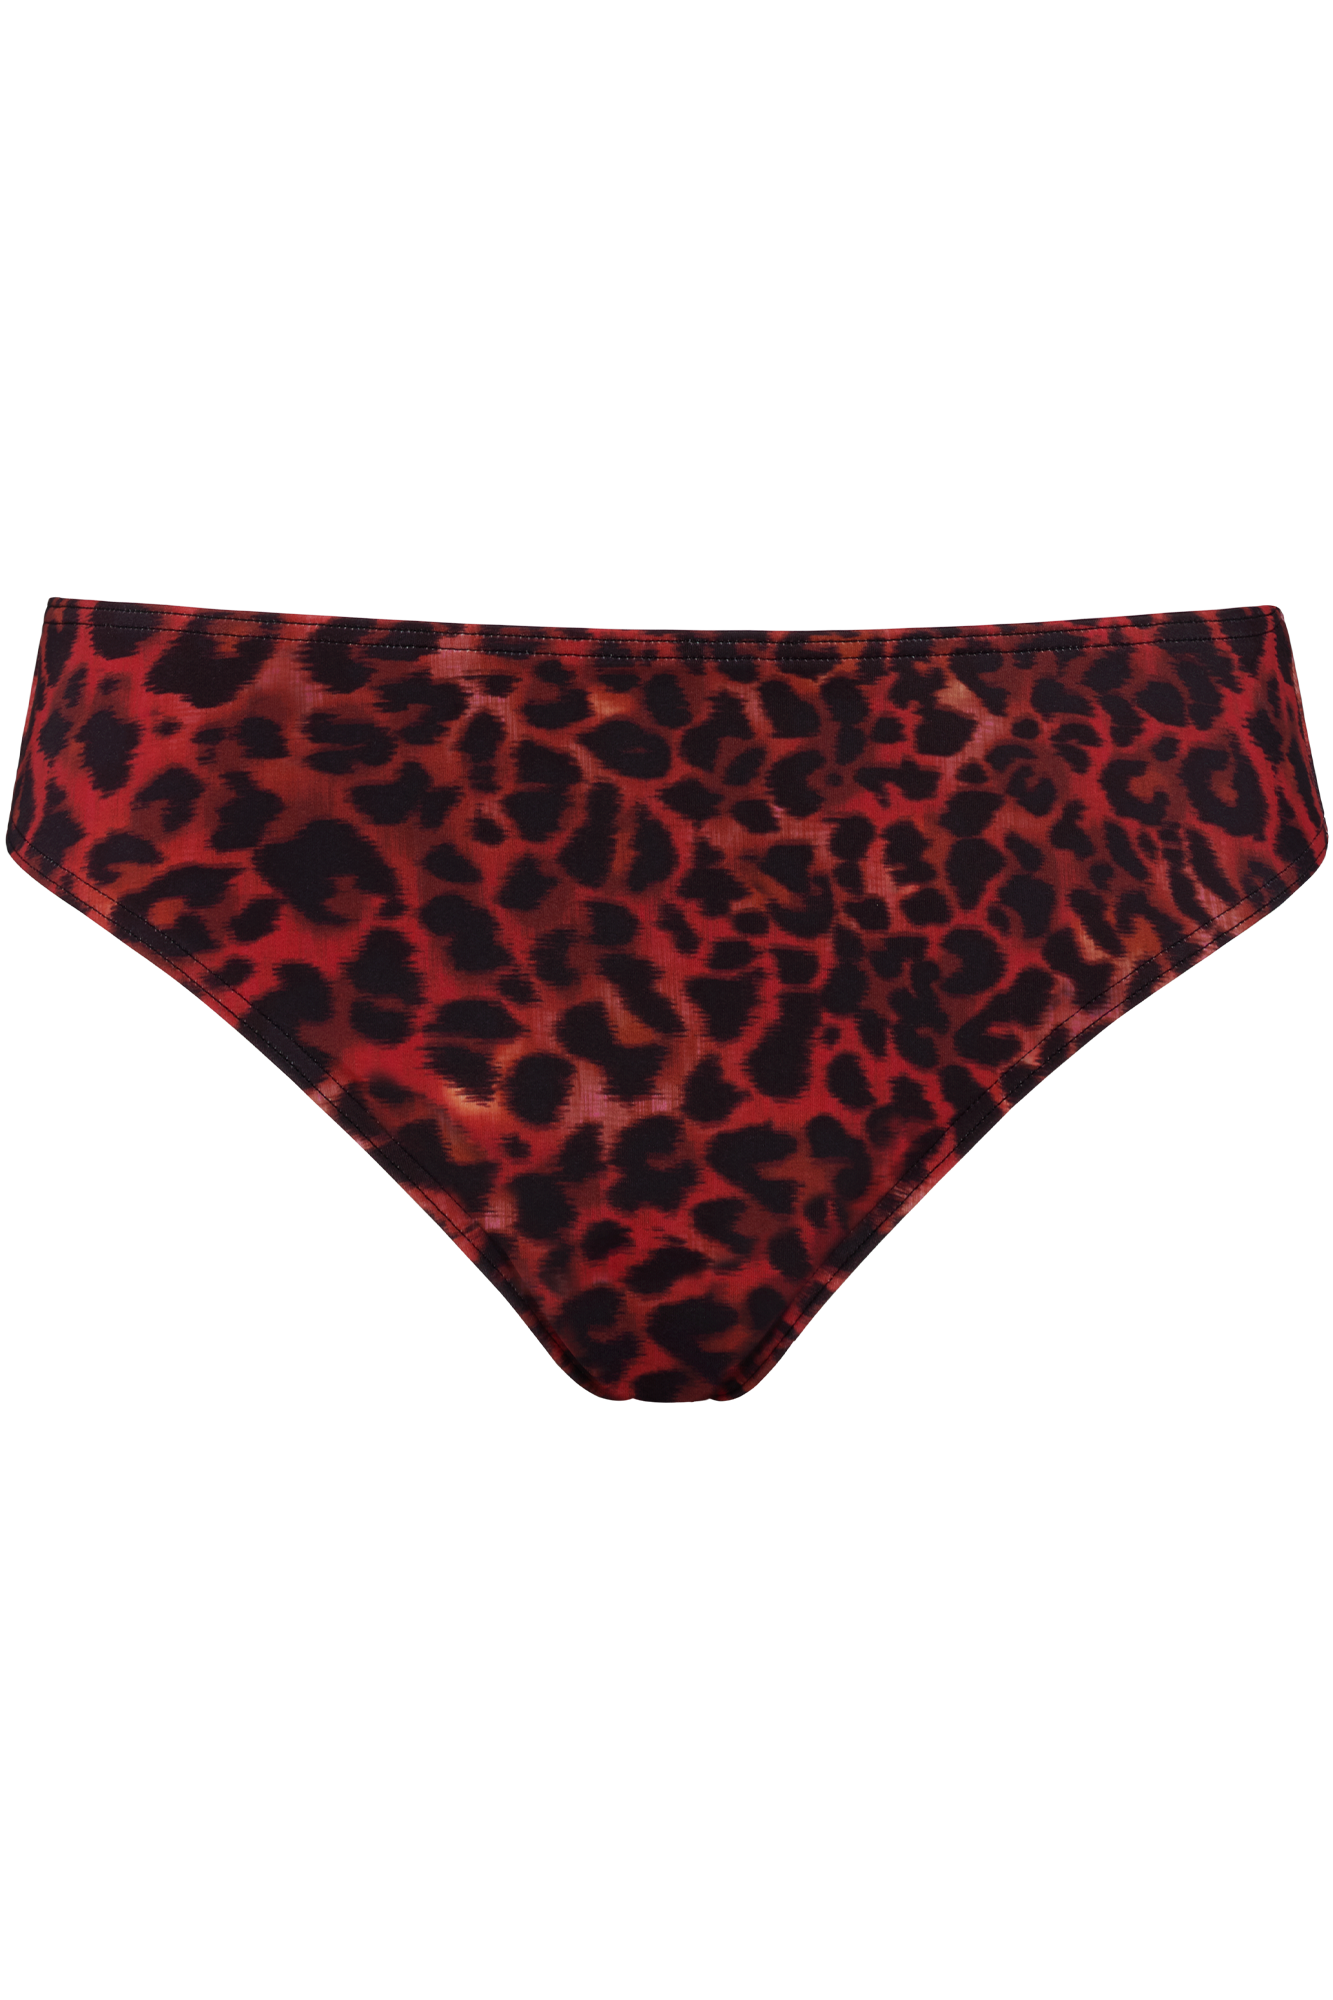 Panthera 5 cm briefs black and red | Marlies Dekkers luxurious designer ...